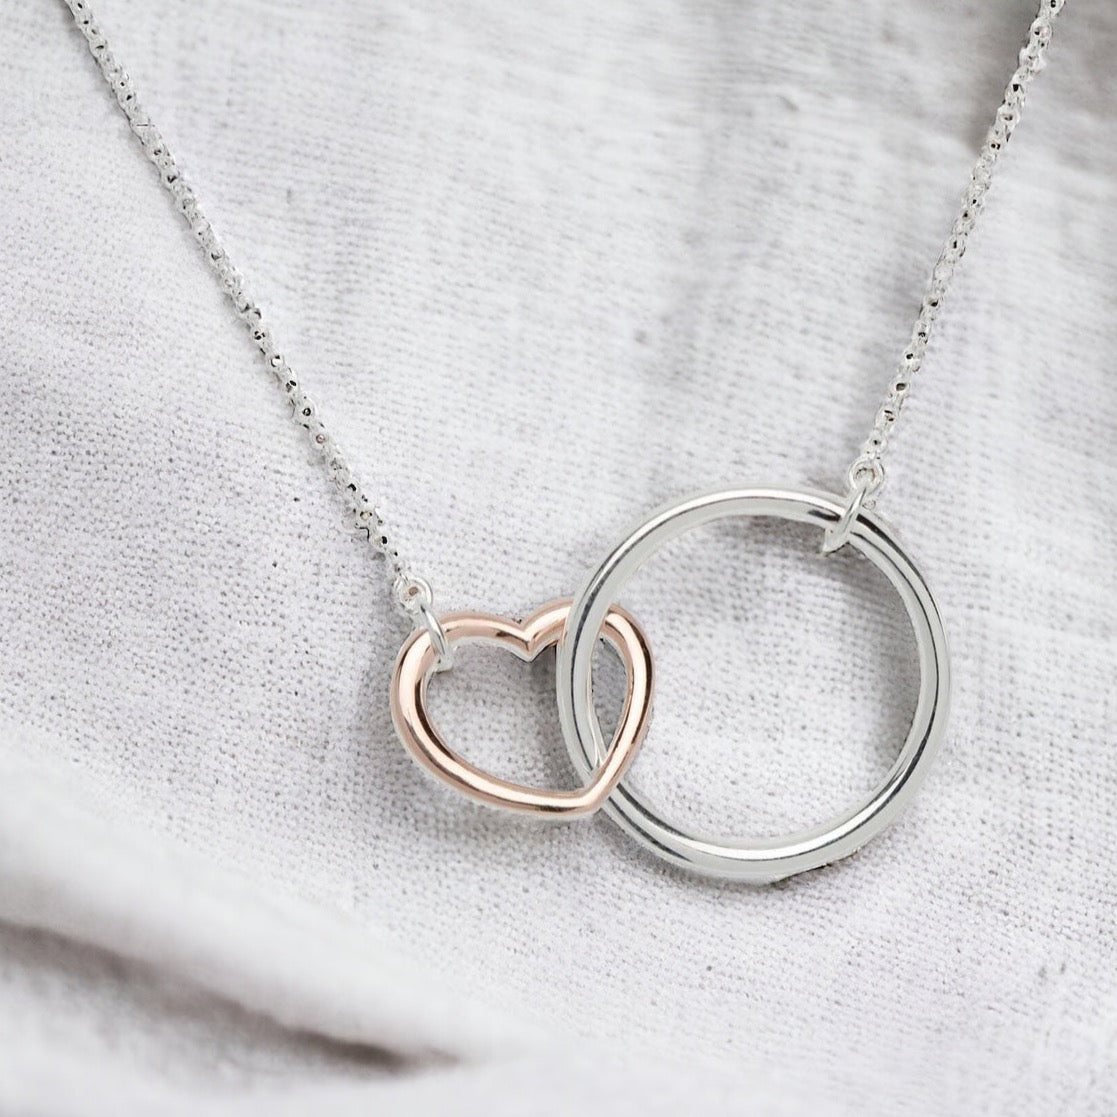 Unique Silver RG Circle & Heart Necklace